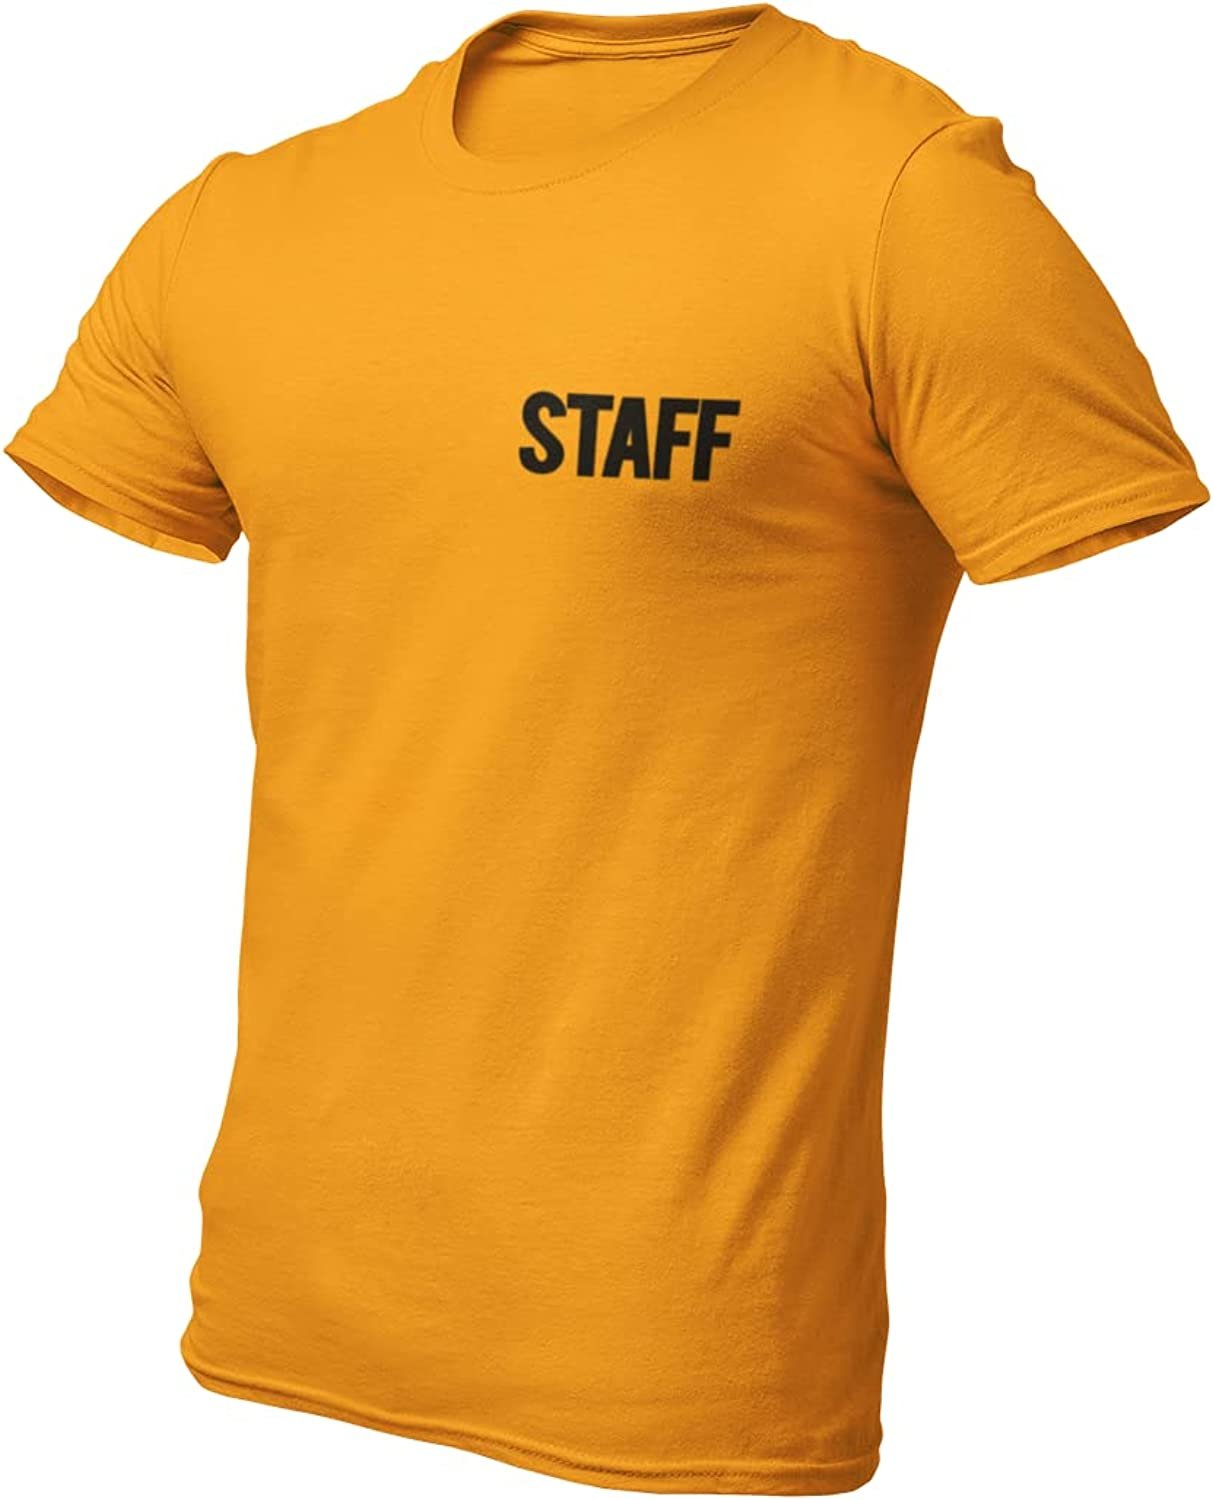 Men's Staff T-Shirt Screen Print Tee (Chest & Back Print, Gold)